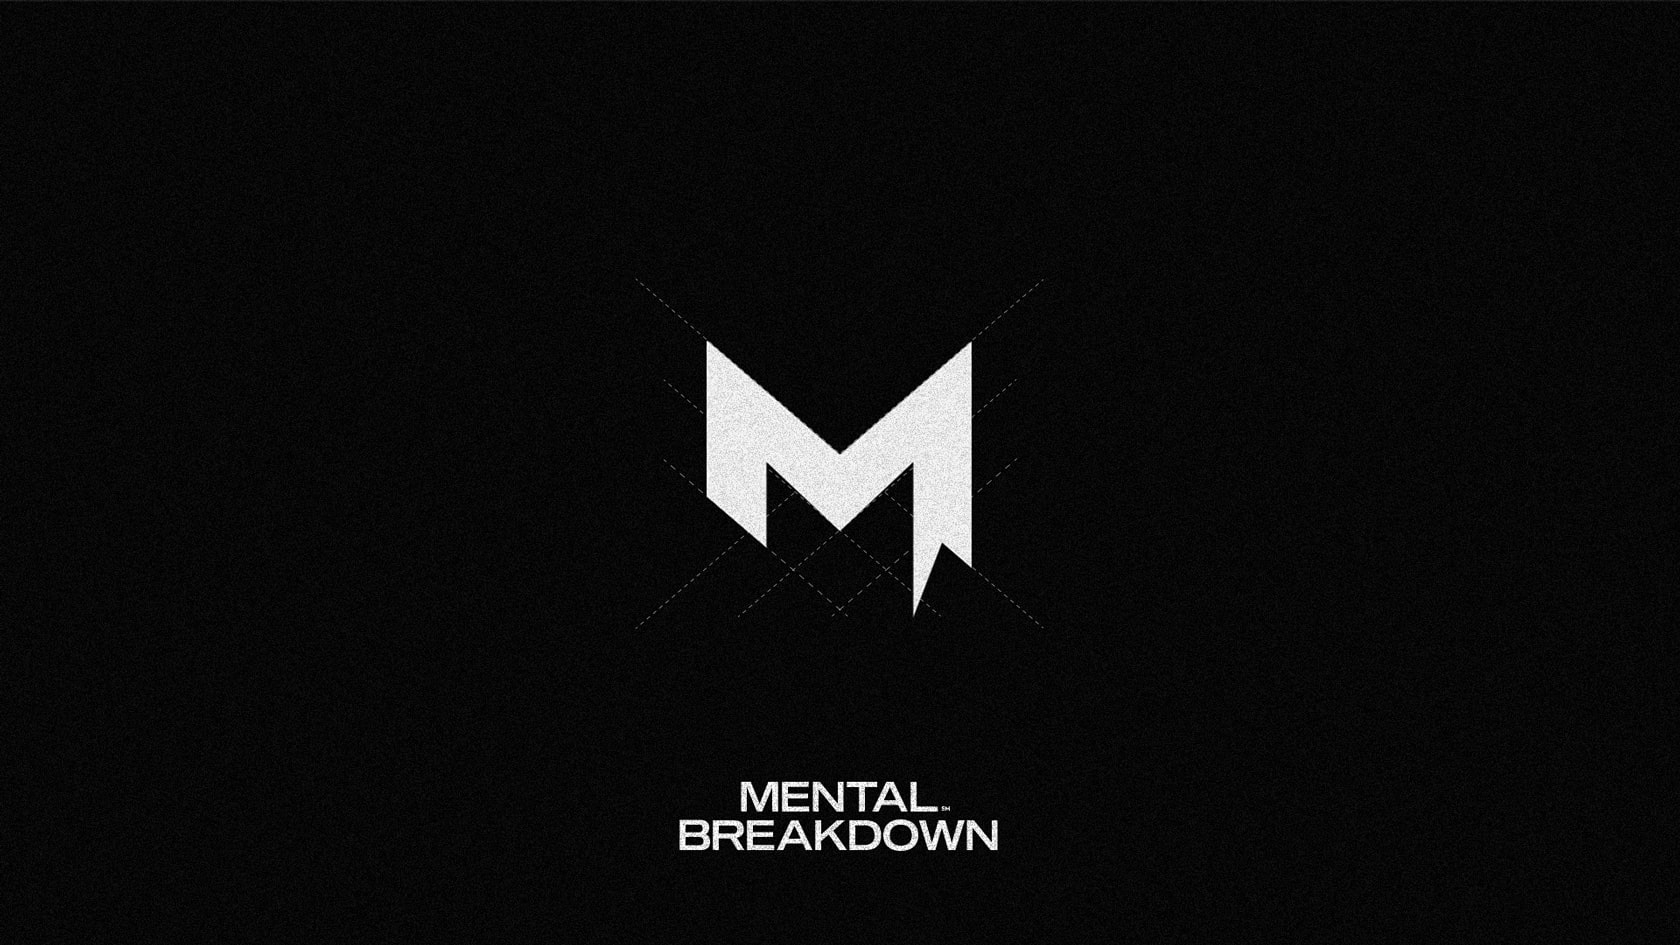 Conception du logo Mental Breakdown